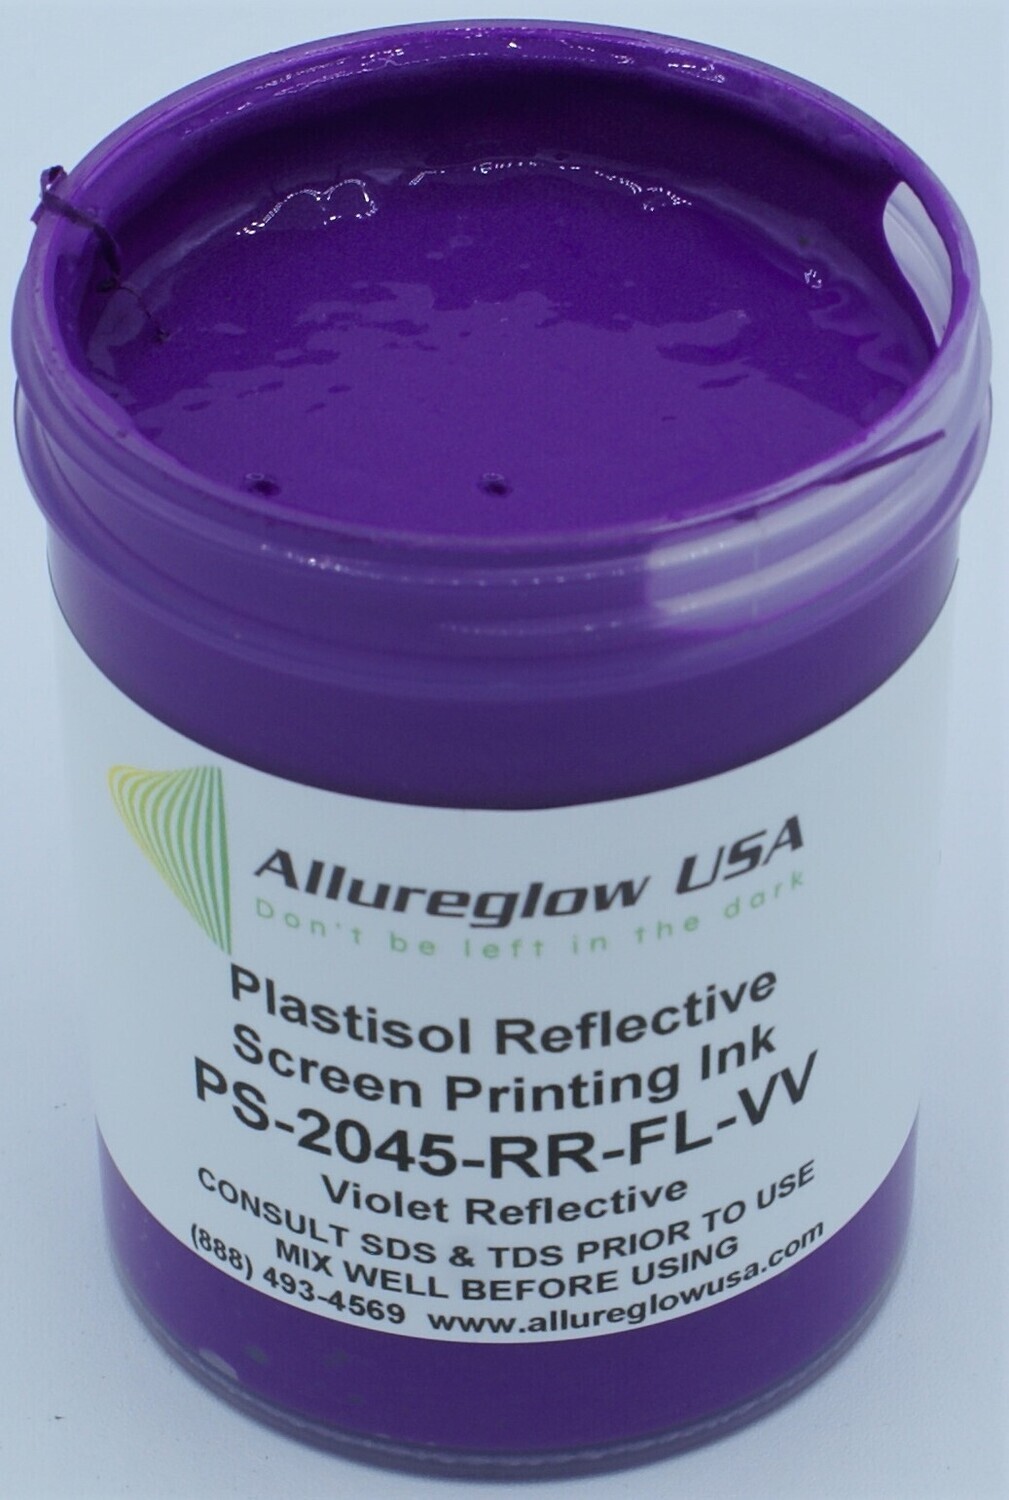 PS-2045-RR-FL-VV-QT PLASTISOL FLUORESCENT VIOLET REFLECTIVE INK QUART